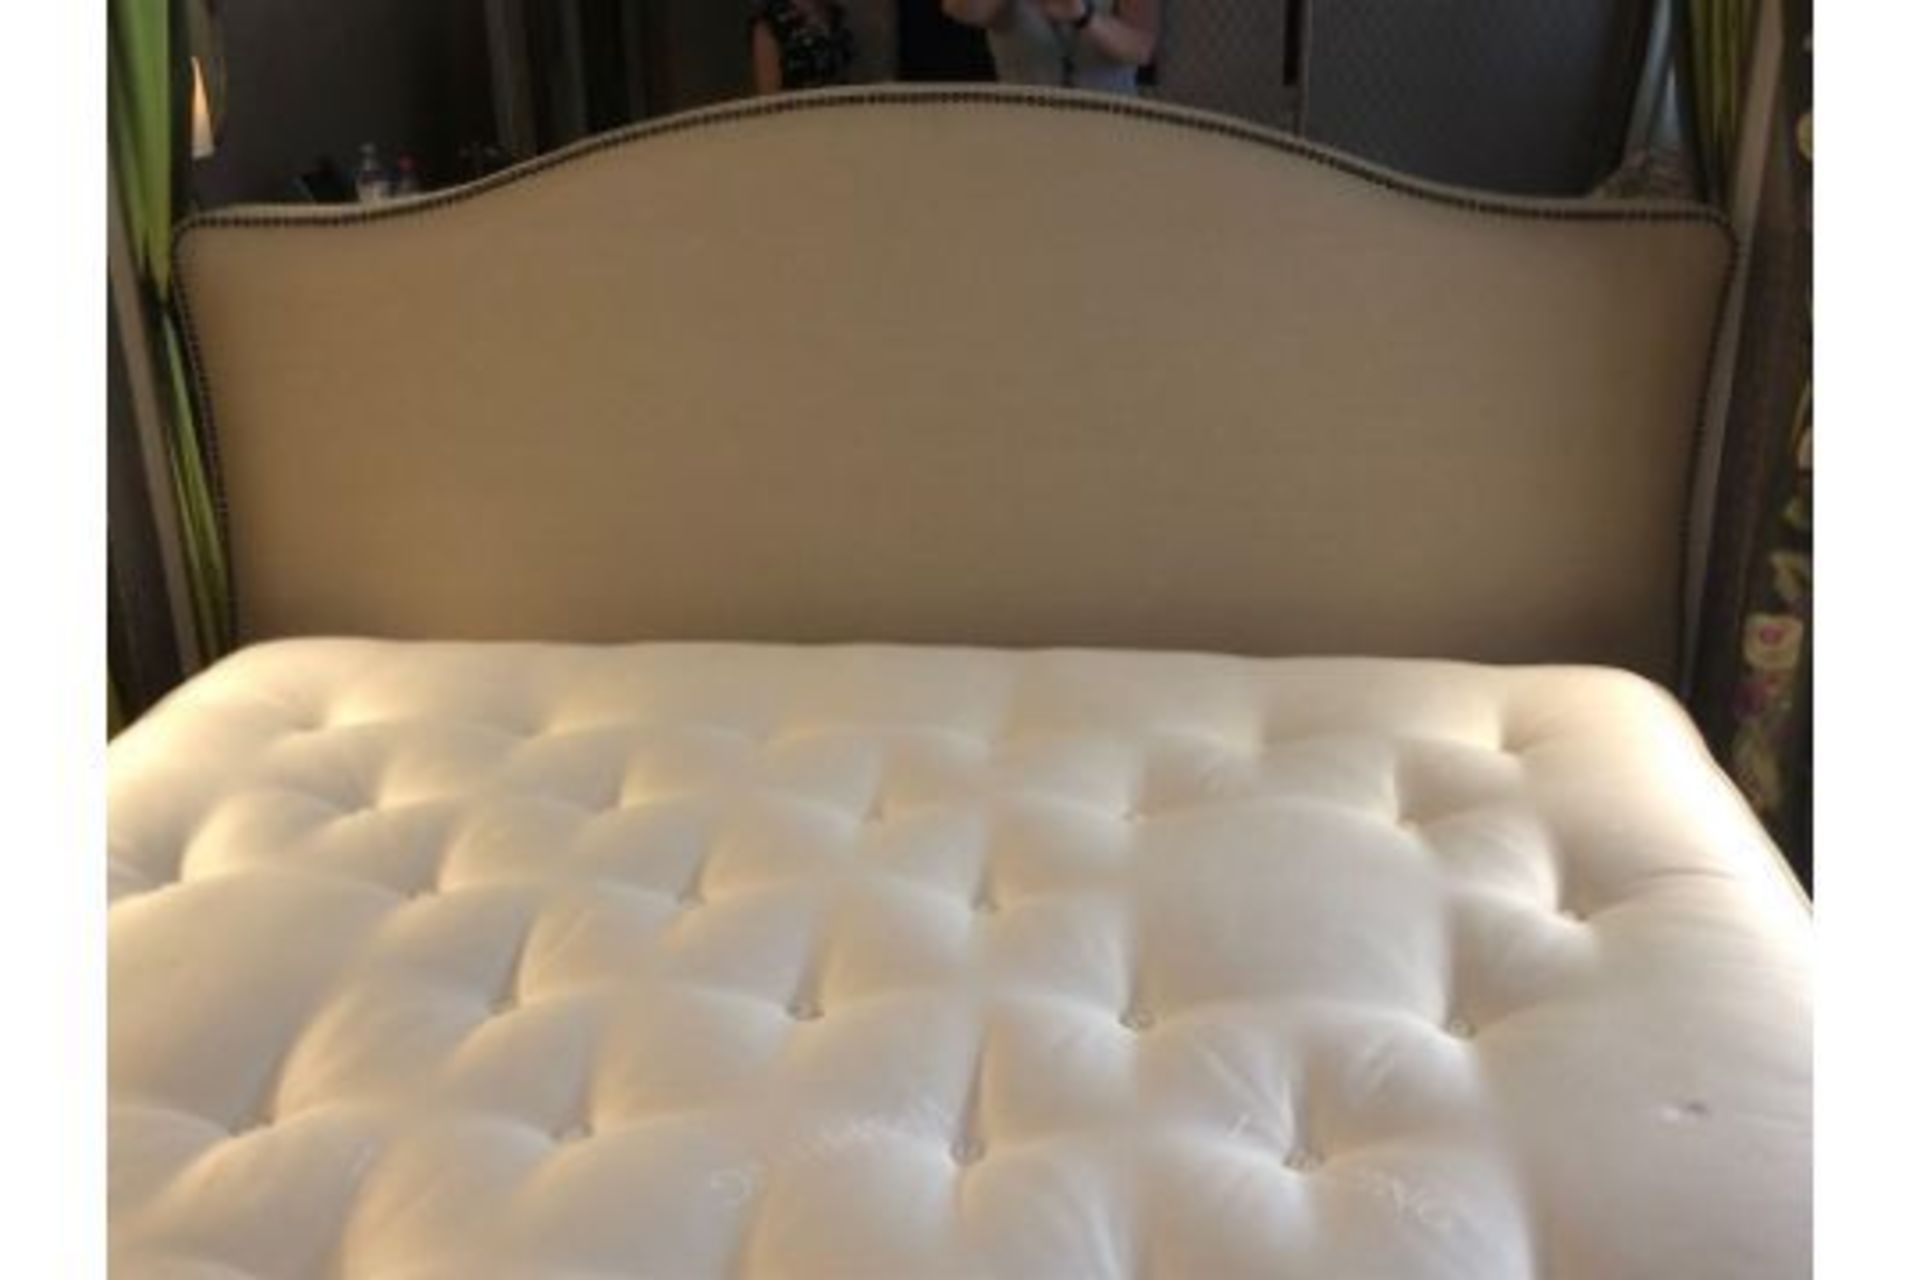 Vispring Hotel Superb Super King Size Mattress 180 x 200cm The Hotel Superb mattress has a